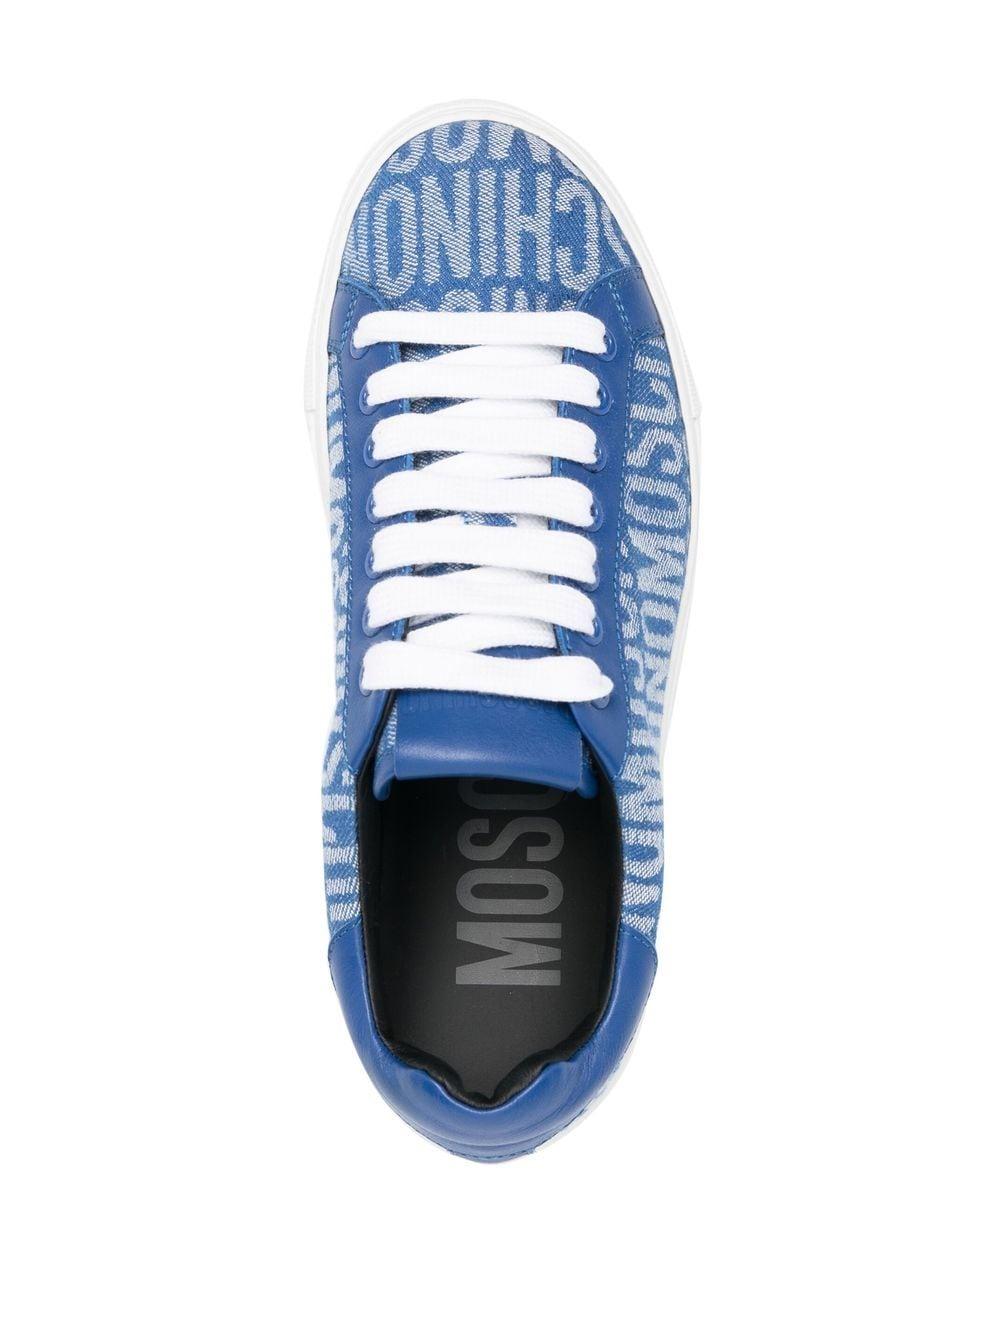 https://cdna.lystit.com/photos/farfetch/491c6cfb/moschino-blue-Logo-pattern-Low-top-Sneakers.jpeg